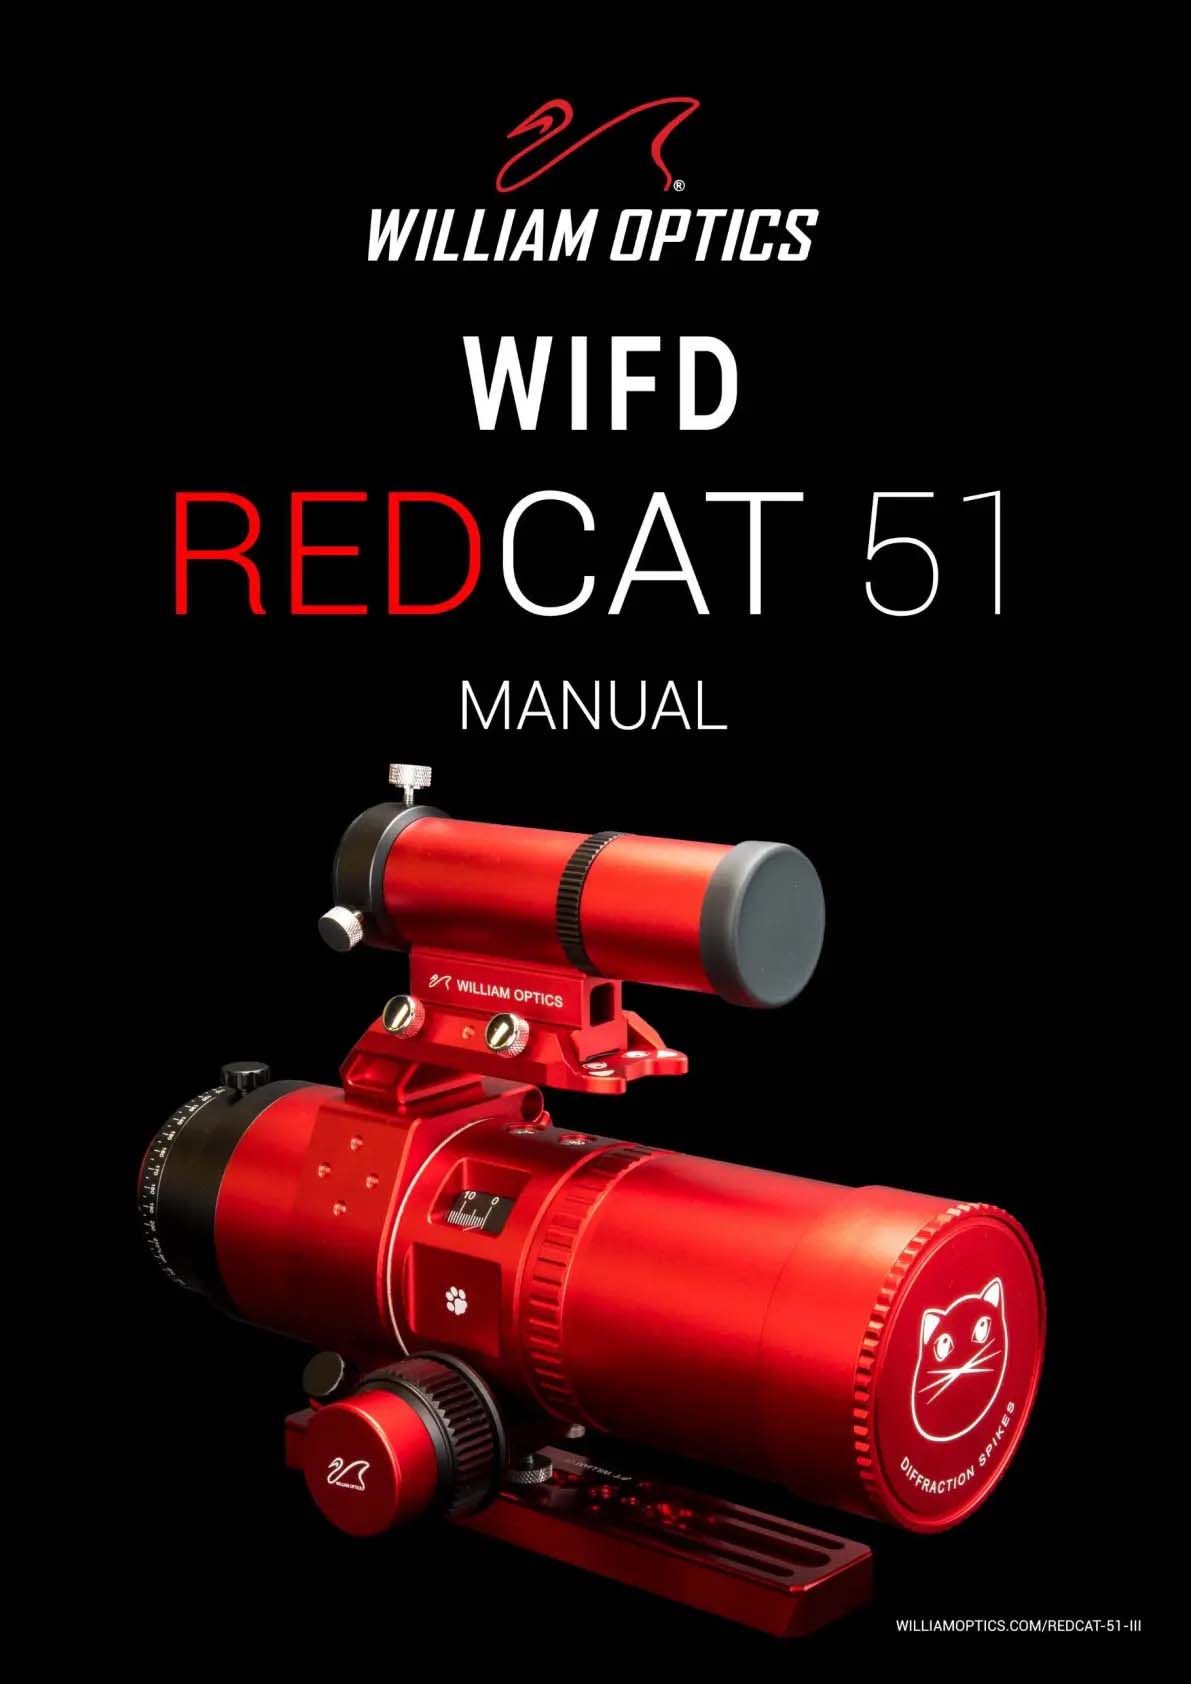 William Optics RedCat 51 III WIFD f/4.9 Petzval Apo Refractor Telescope 